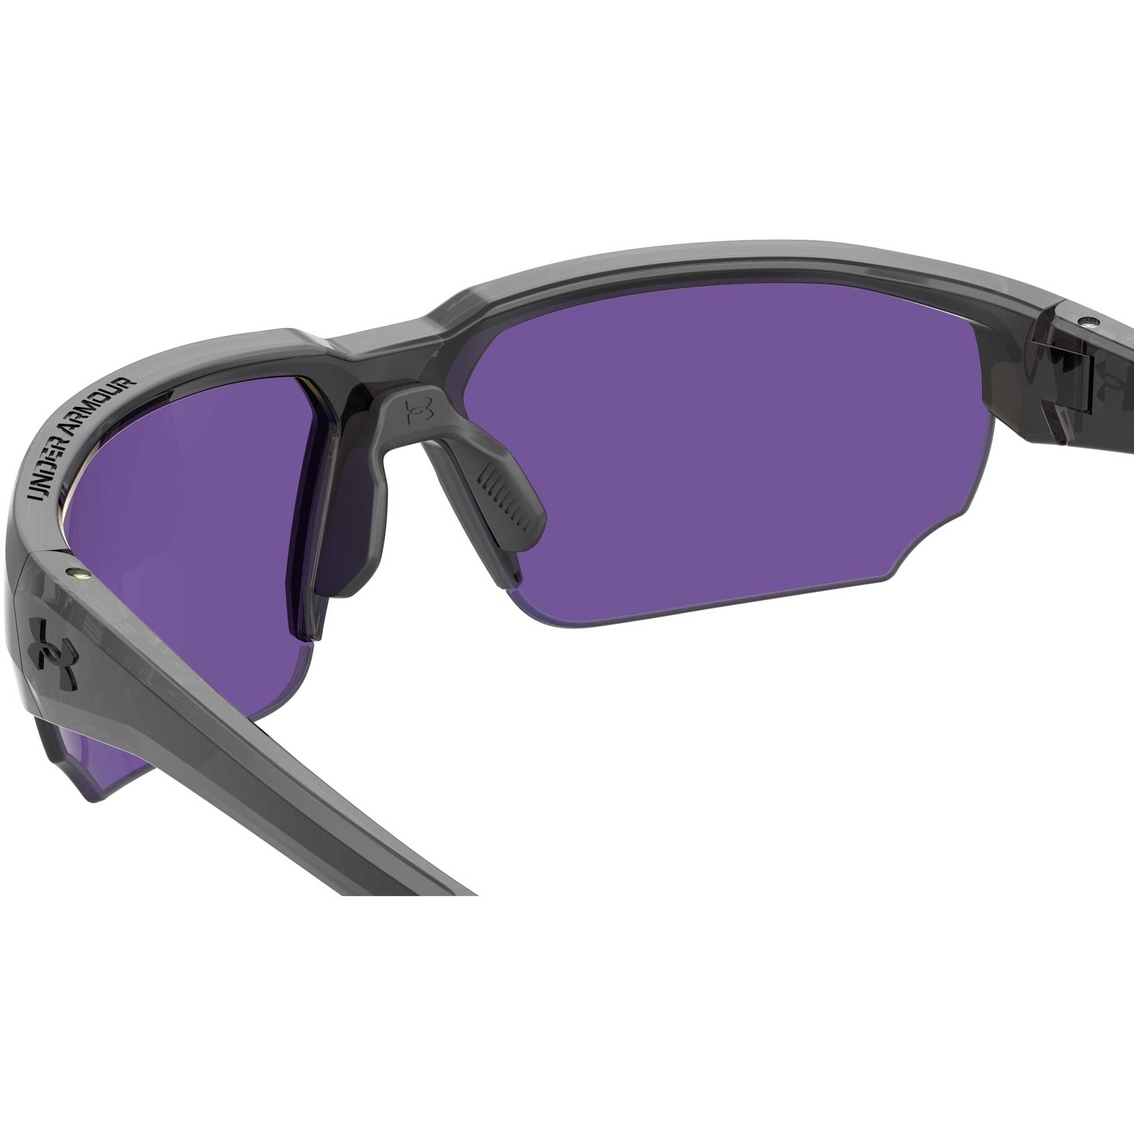 Under Armour Semi Rimmed Shield Shape, Non RX ABLE Mirror Lens UA0012S Sunglasses - Image 3 of 4